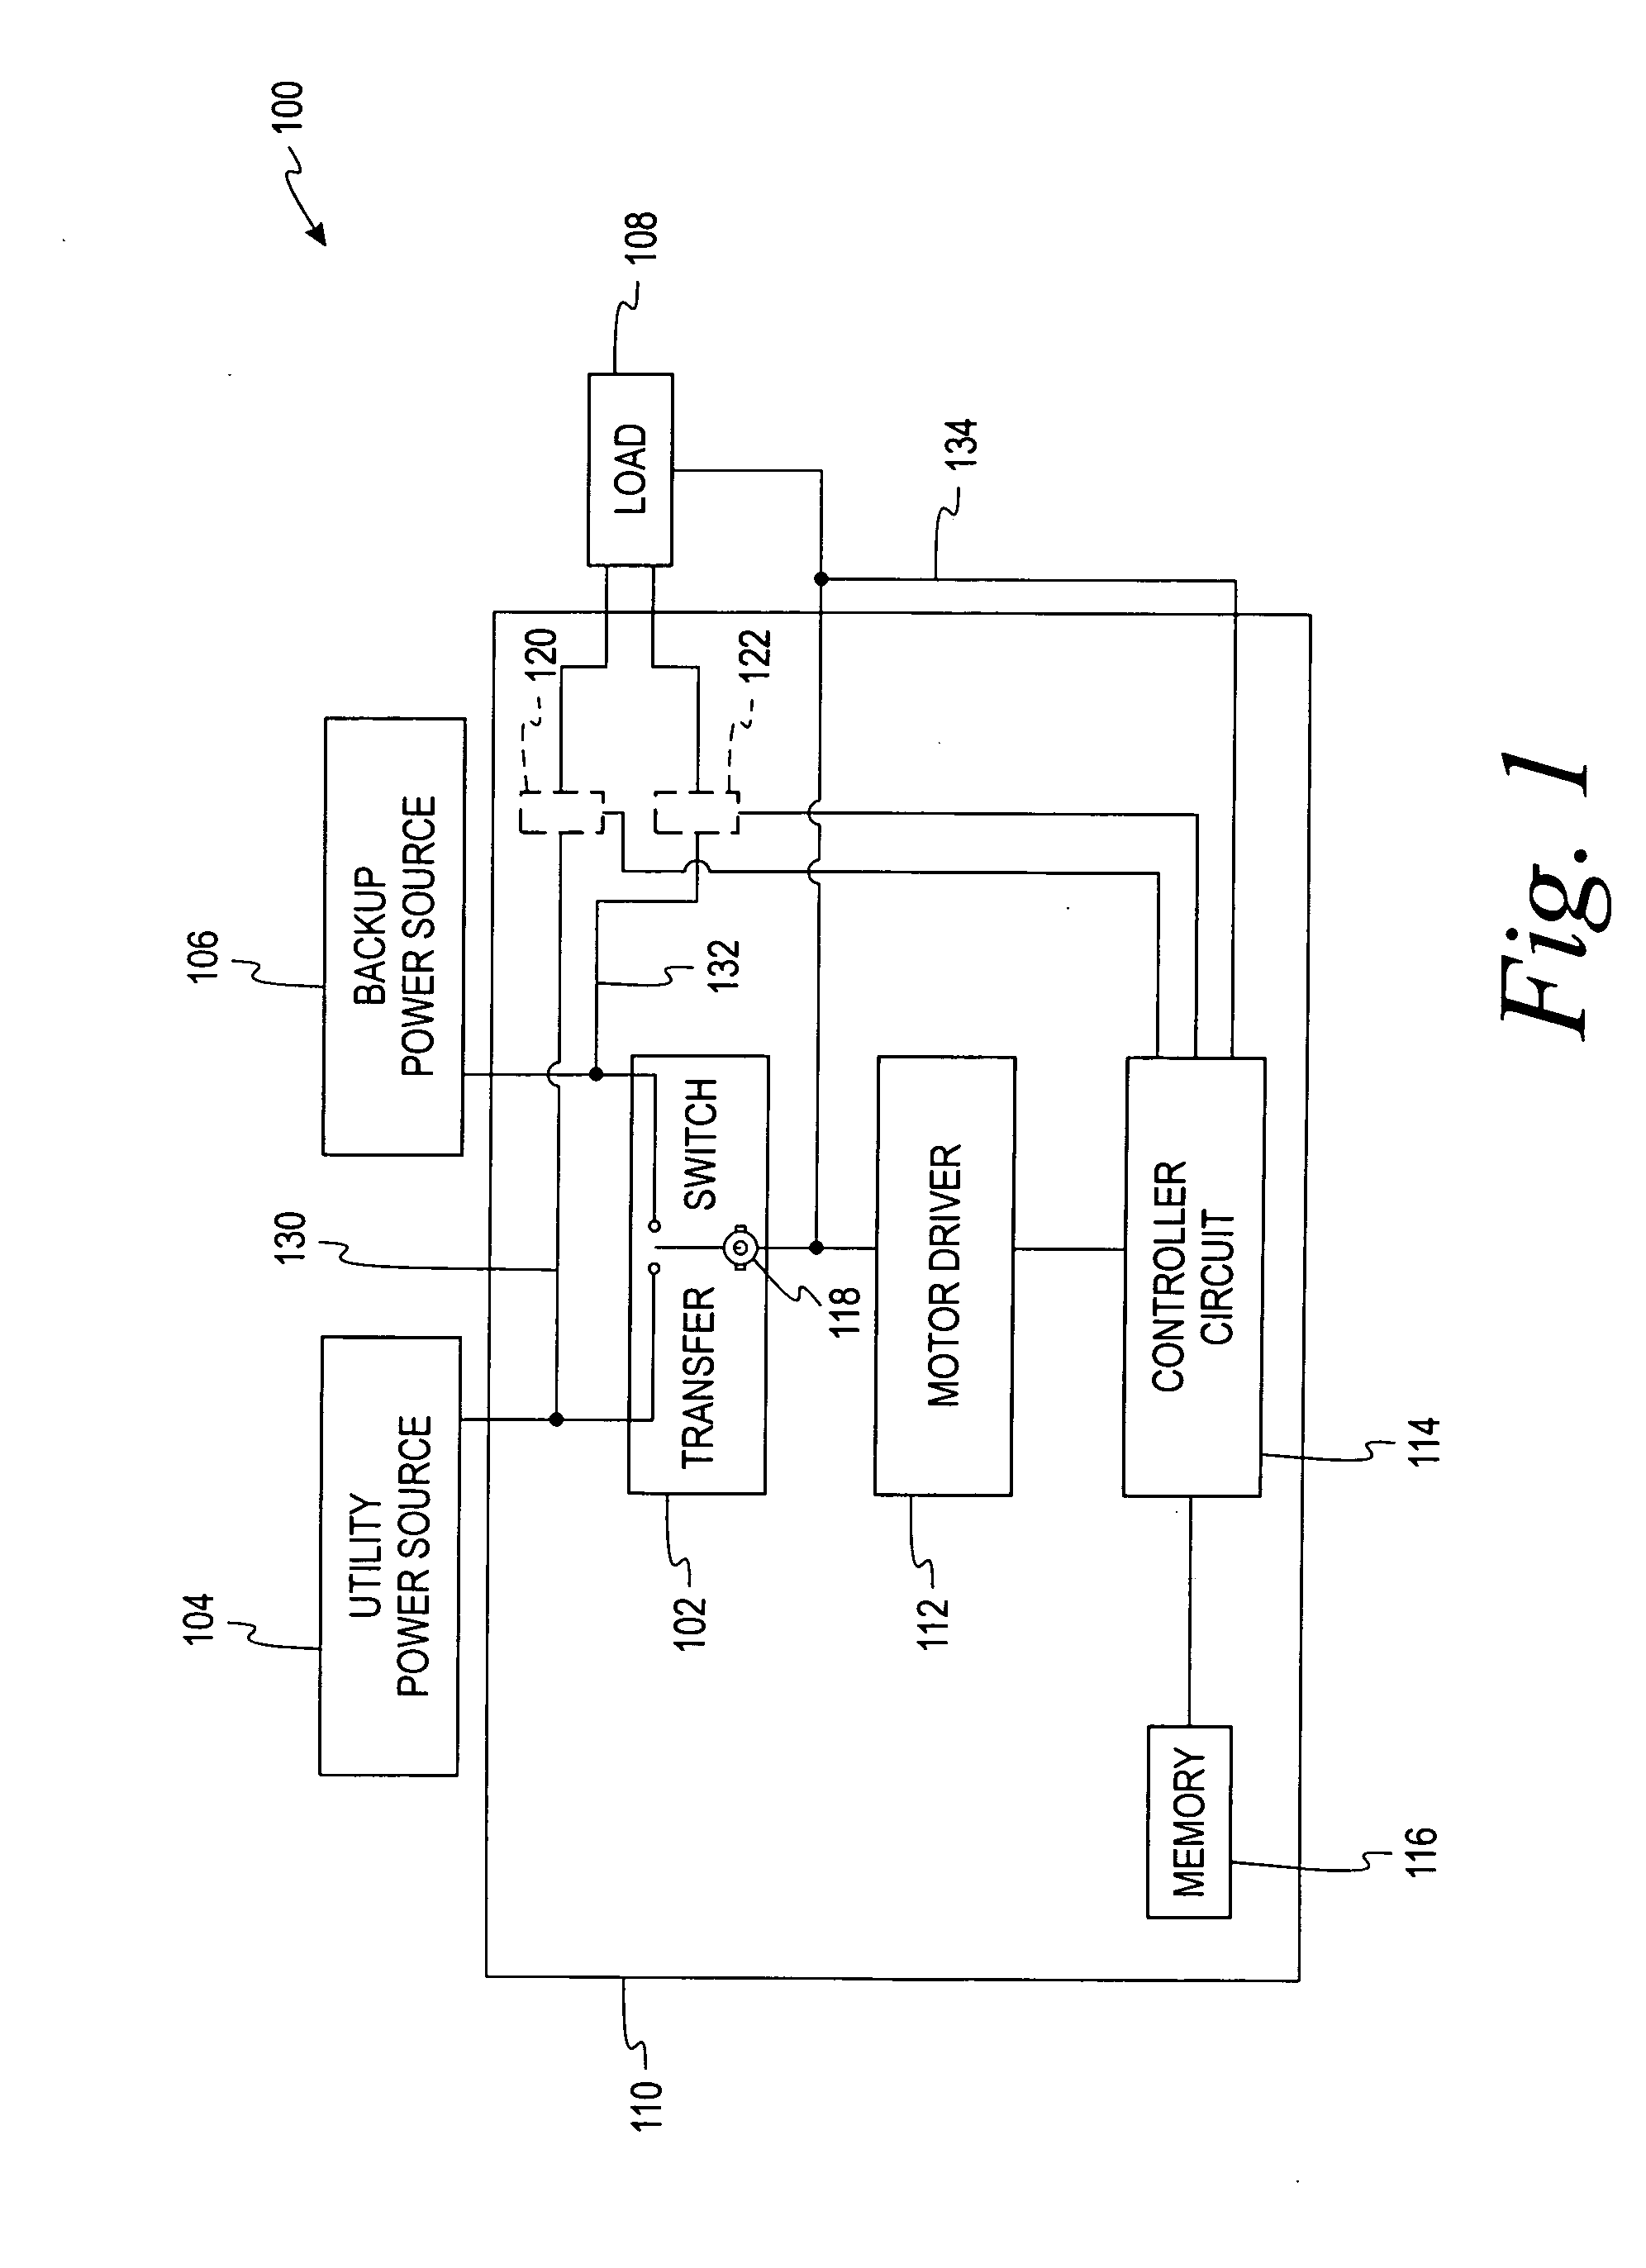 DC motor phase detection method